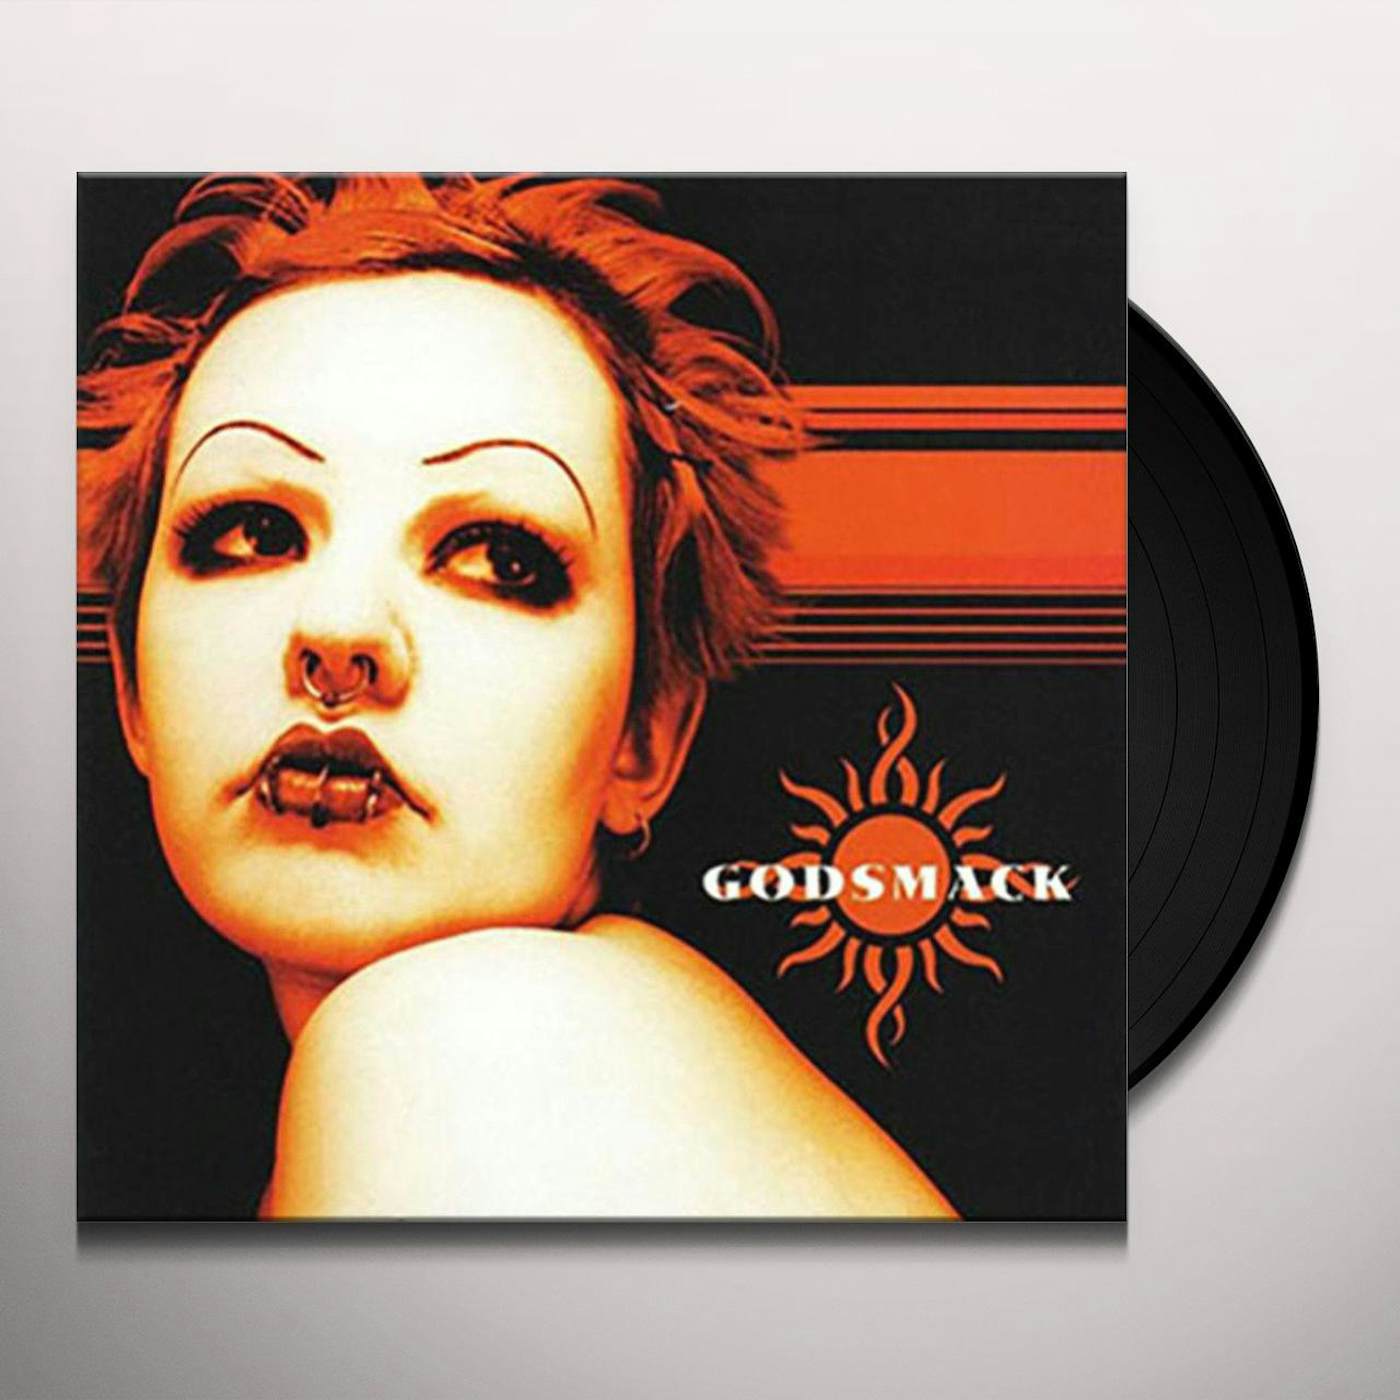  Godsmack S/T Vinyl Record